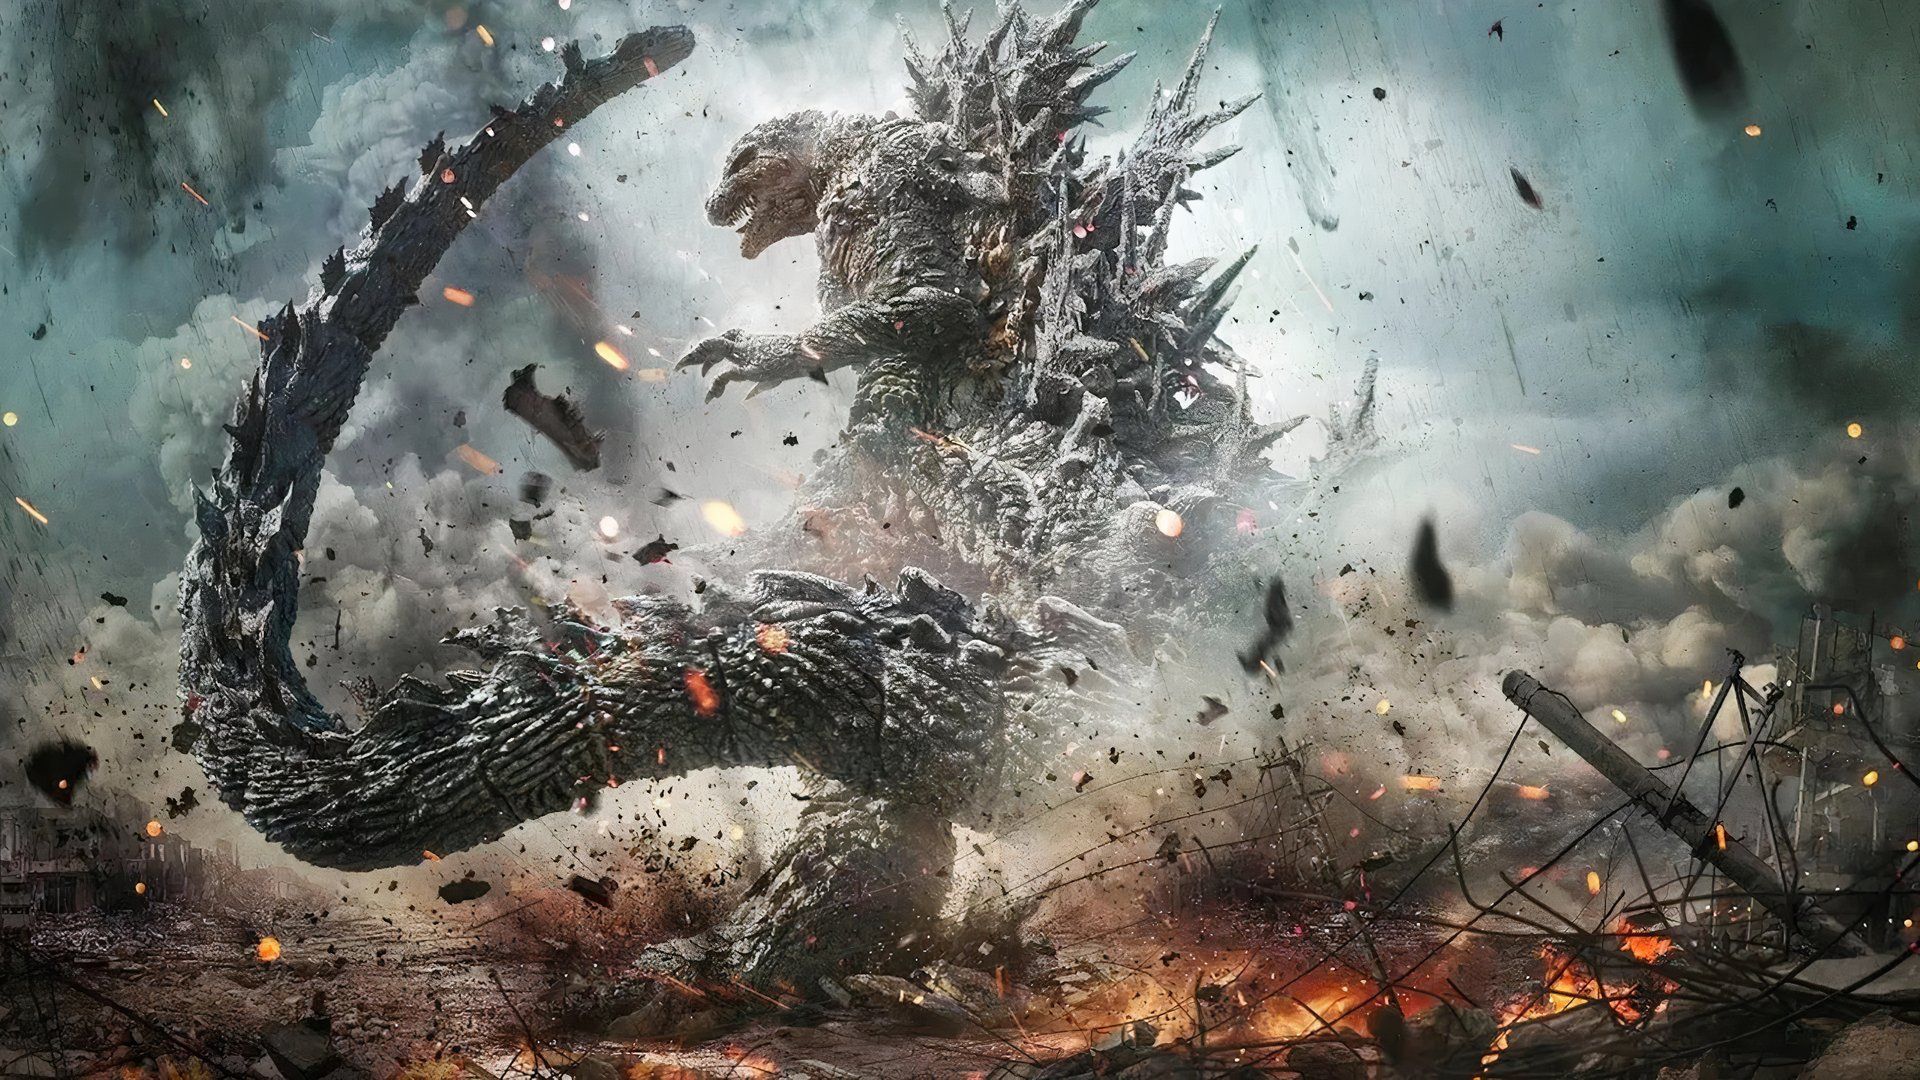 Godzilla causing havoc in Godzilla Minus One